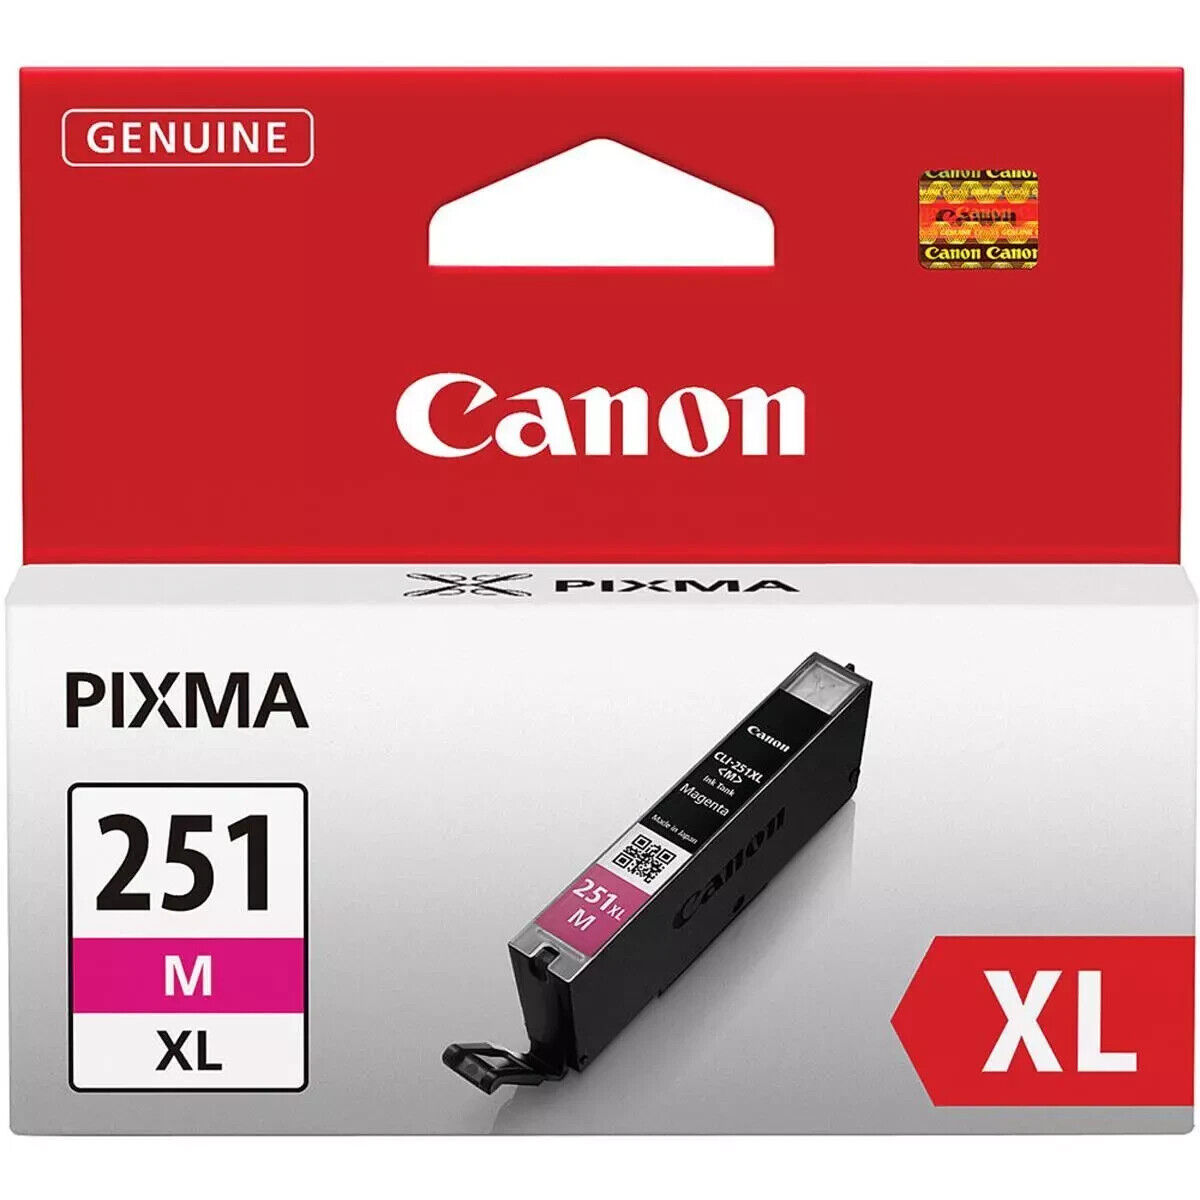 GENUINE Canon Pixma IP7220 IP8720 IX6820 High Yield Magenta Toner CLI-251XL M